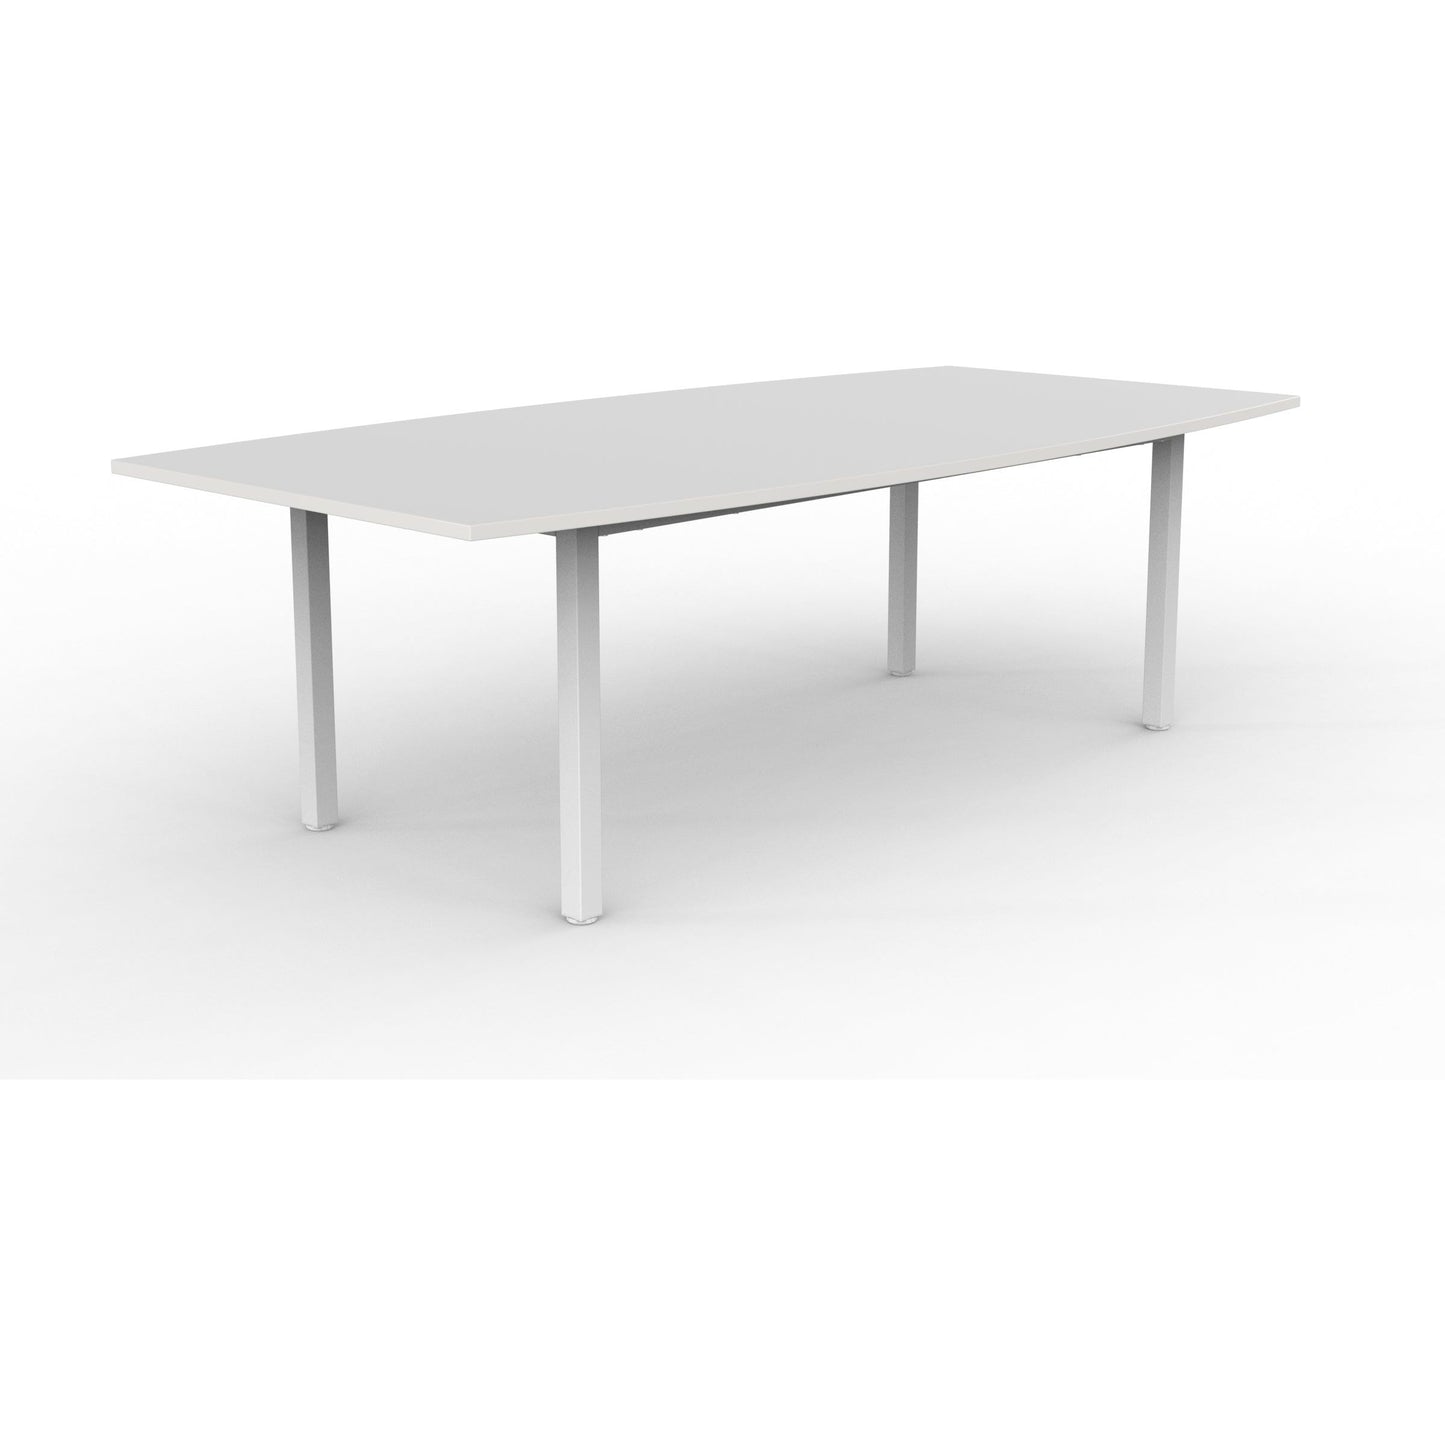 Cubit Boardroom Table Range